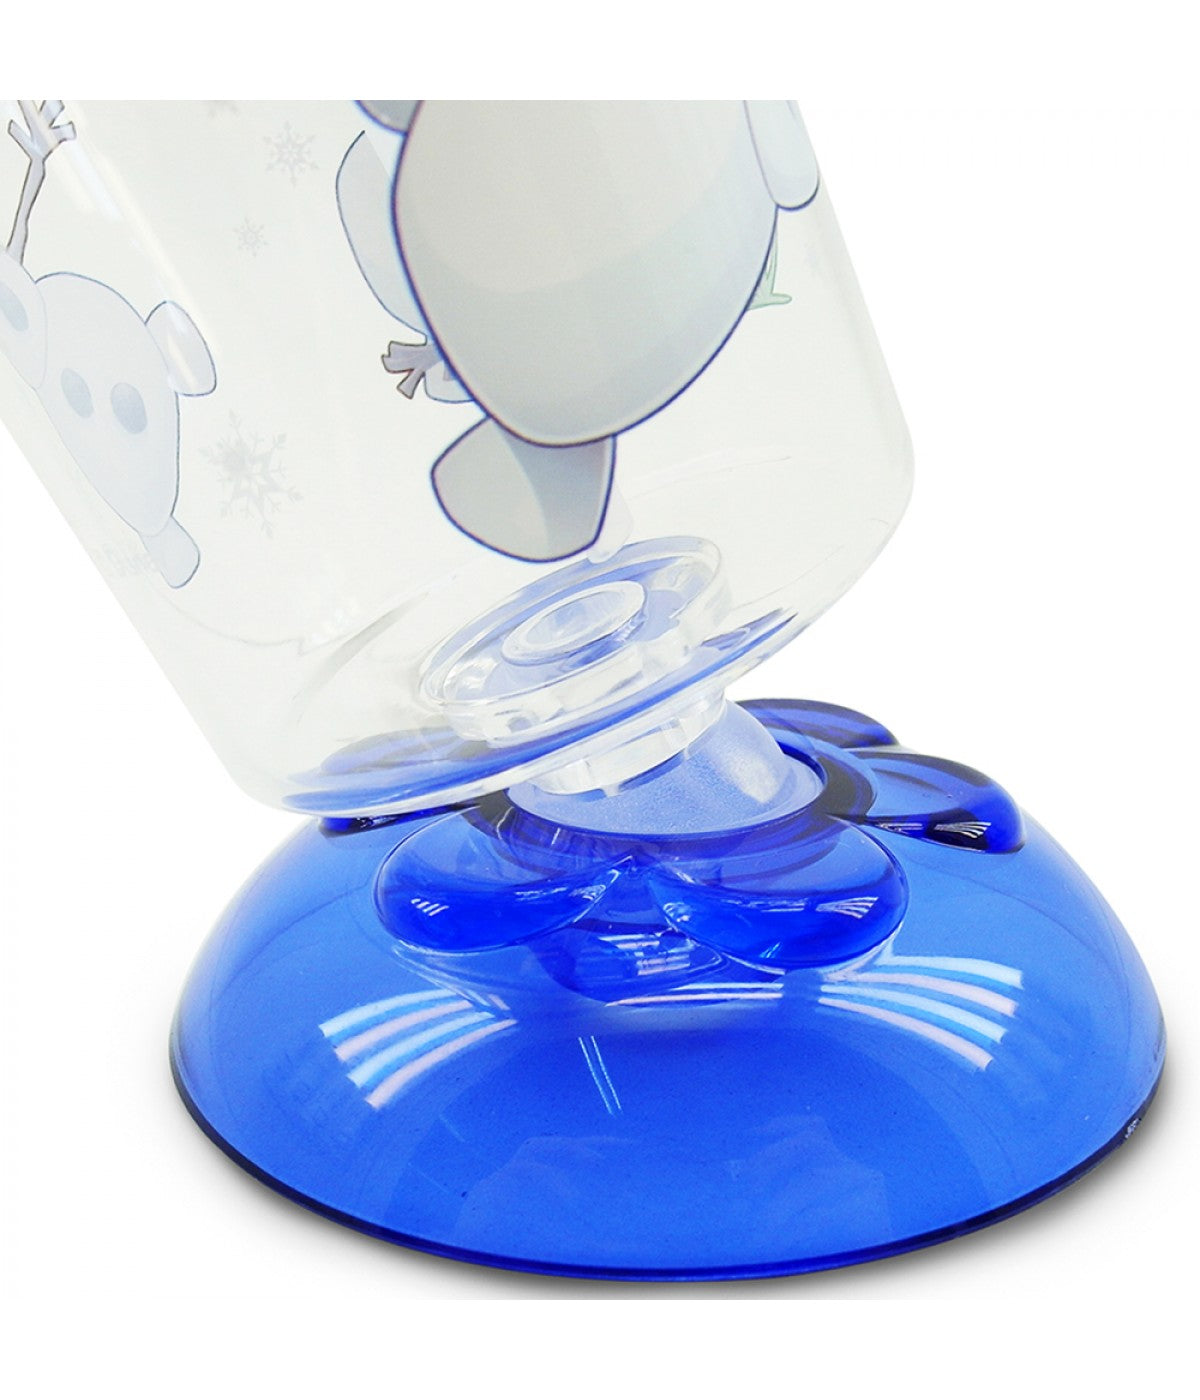 Children's Cup Acrylic Tilting Base Olaf Frozen Disney